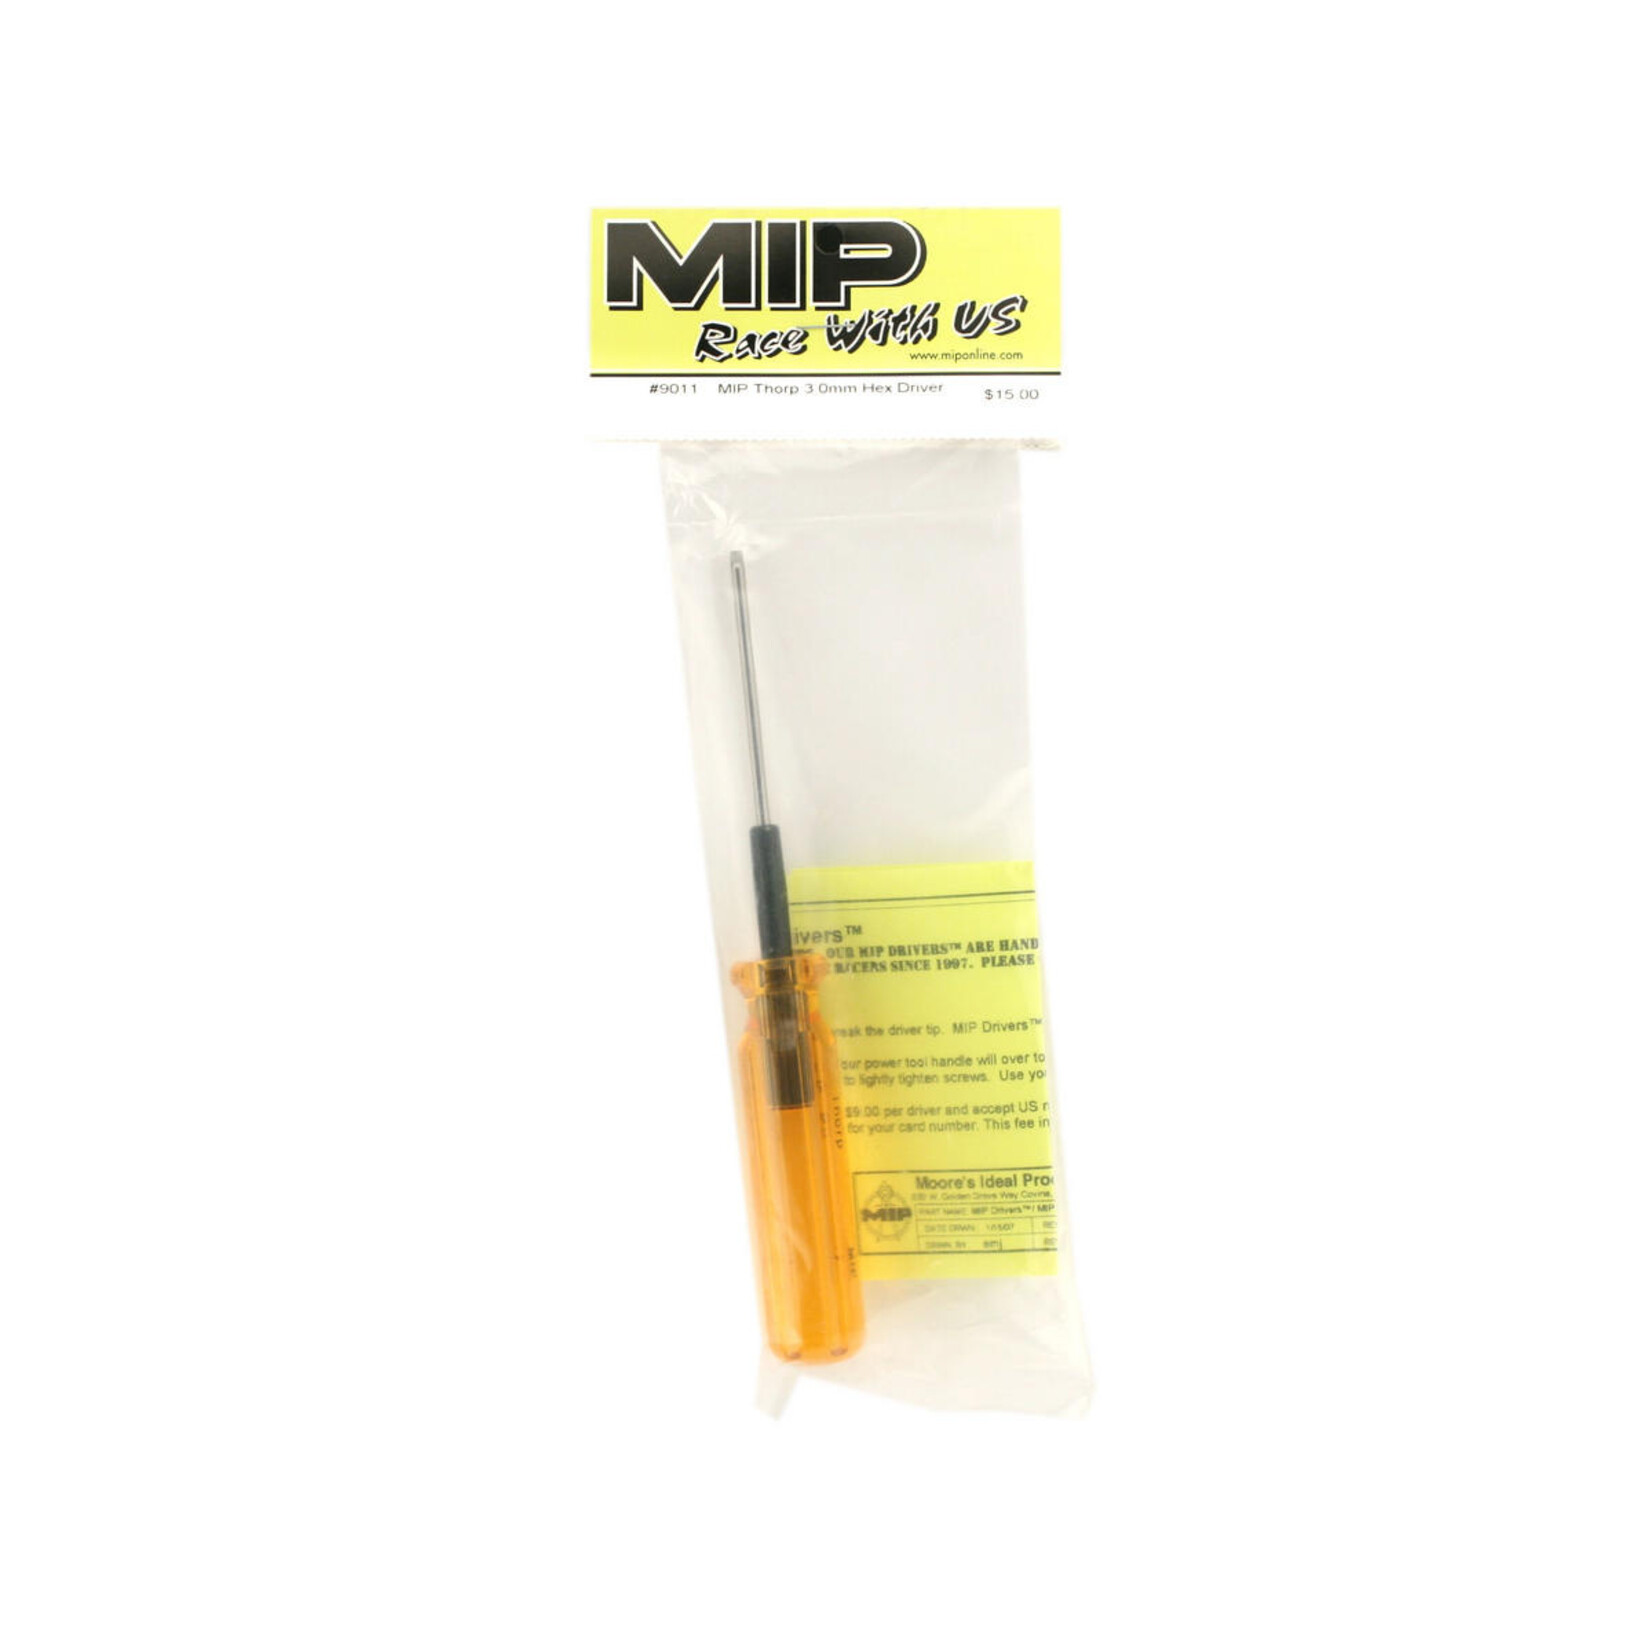 MIP MIP Thorp Hex Driver (3.0mm) #9011